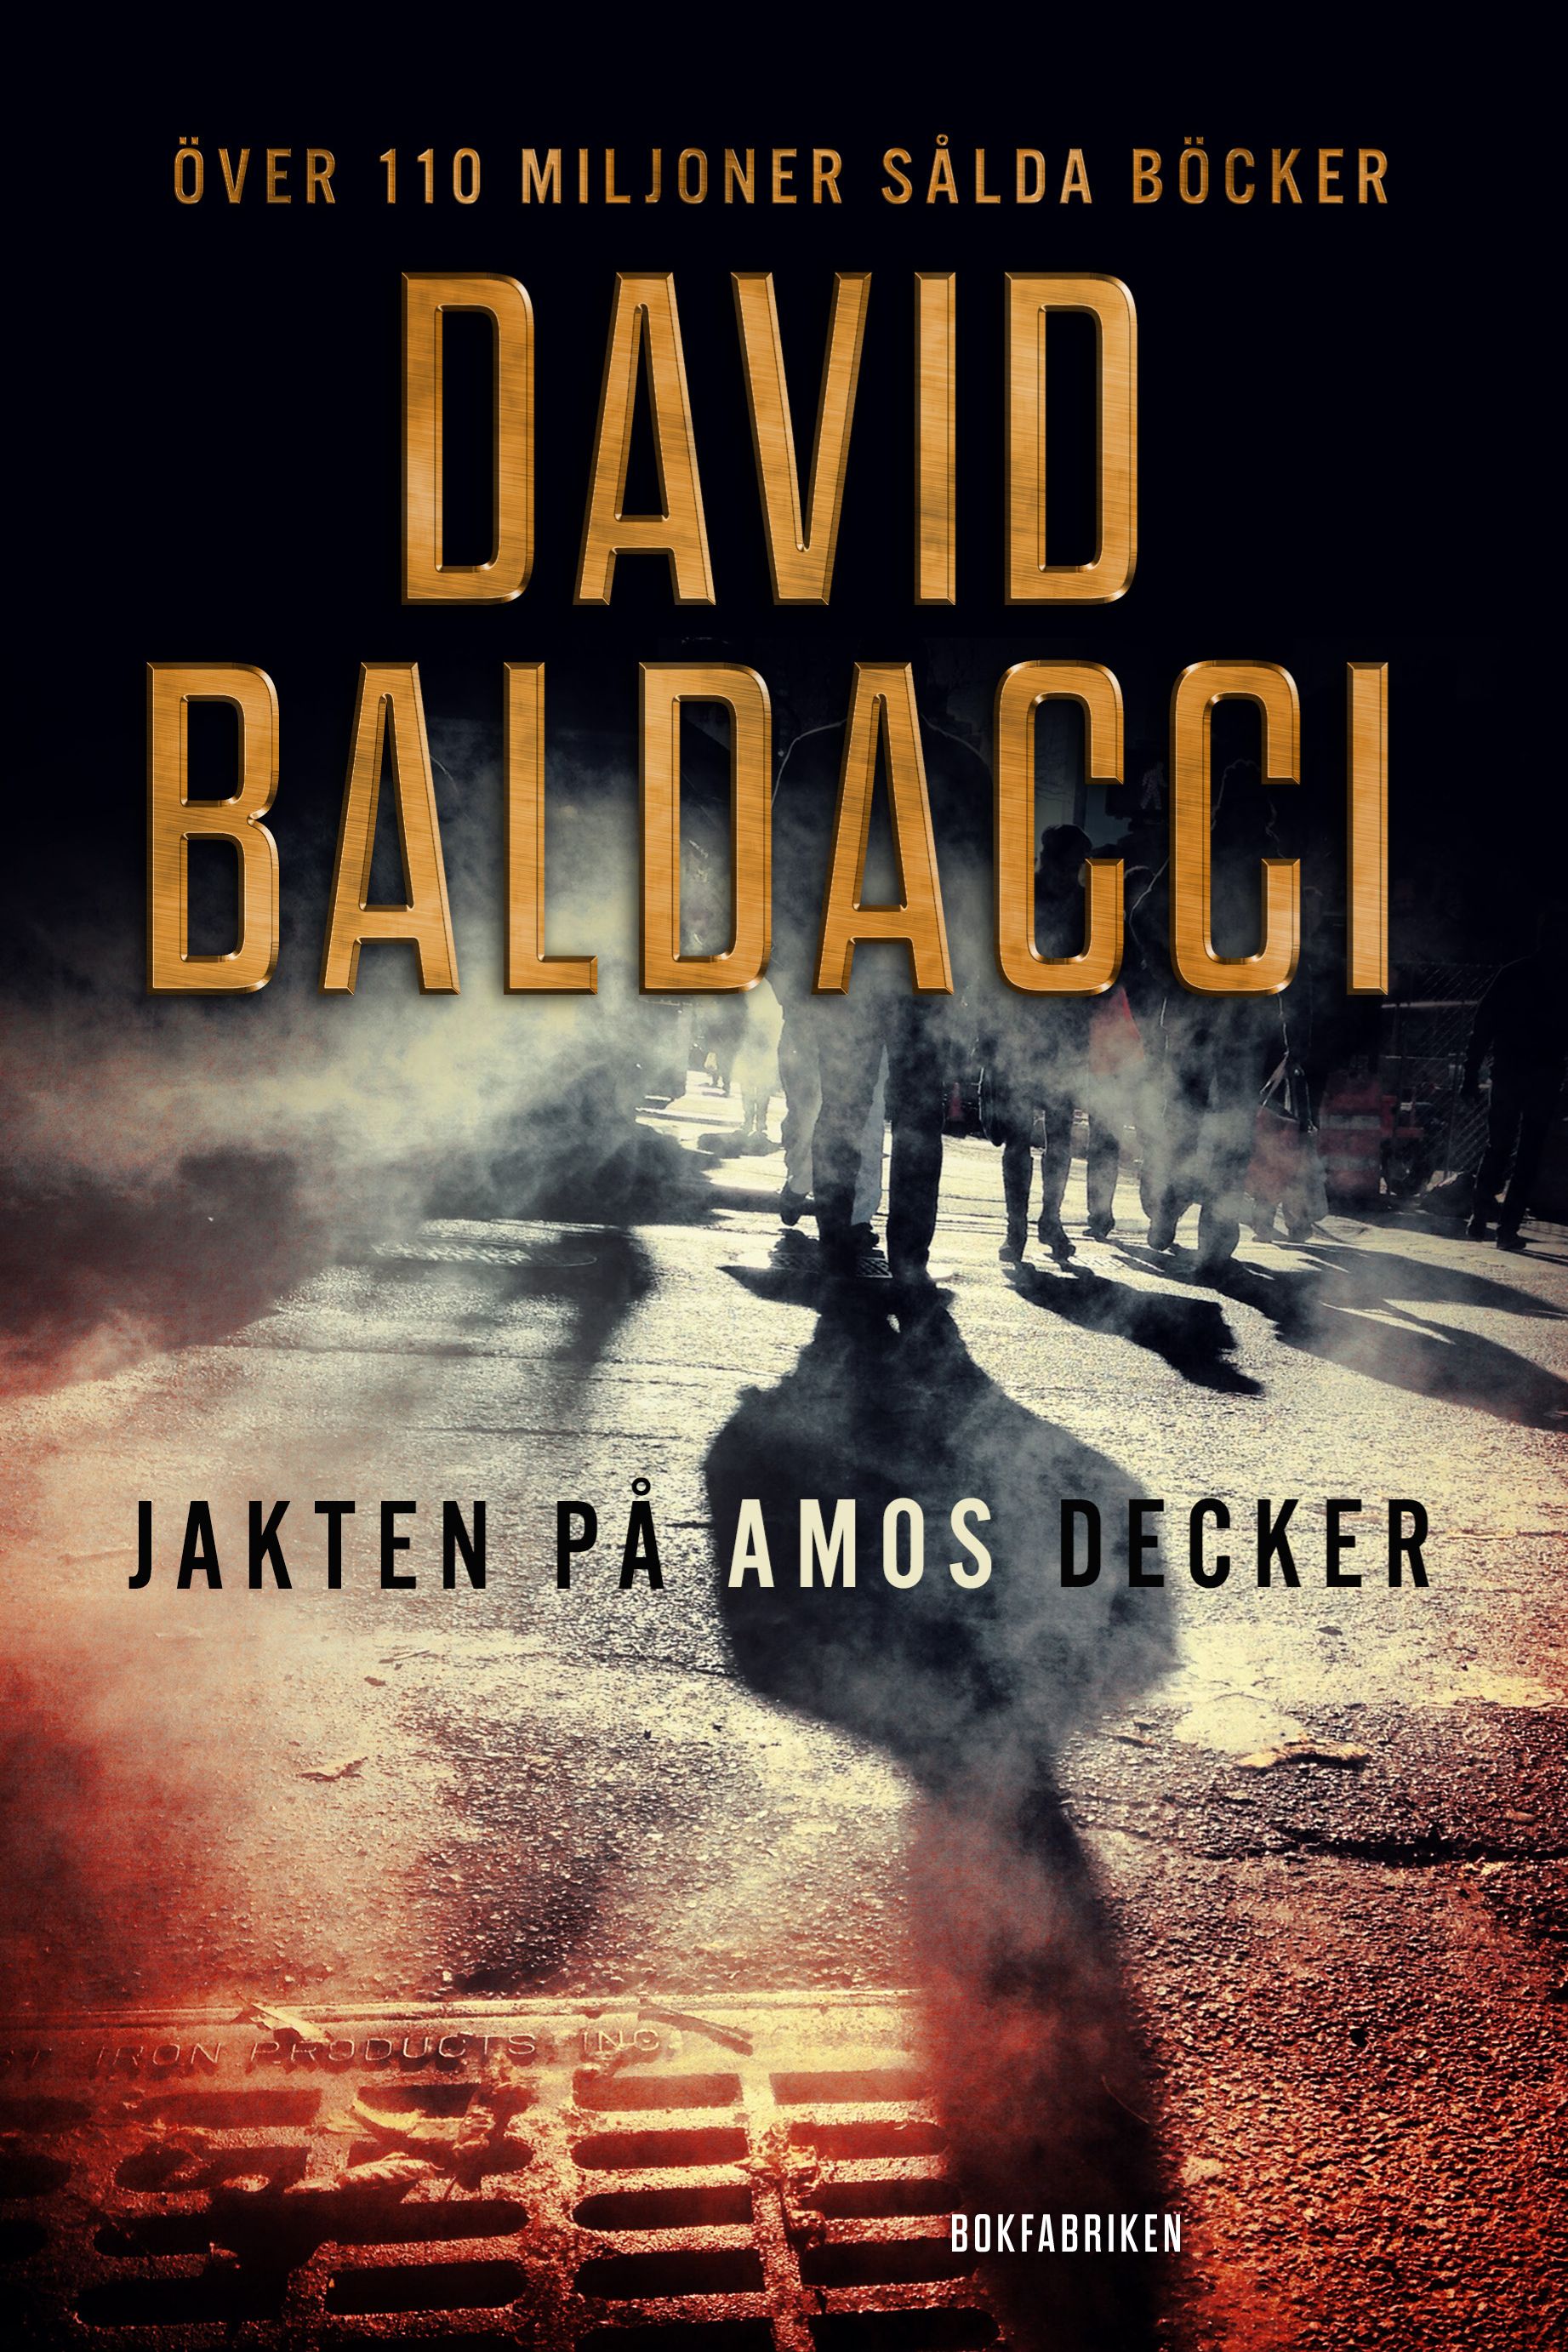 Jakten på Amos Decker, eBook by David Baldacci